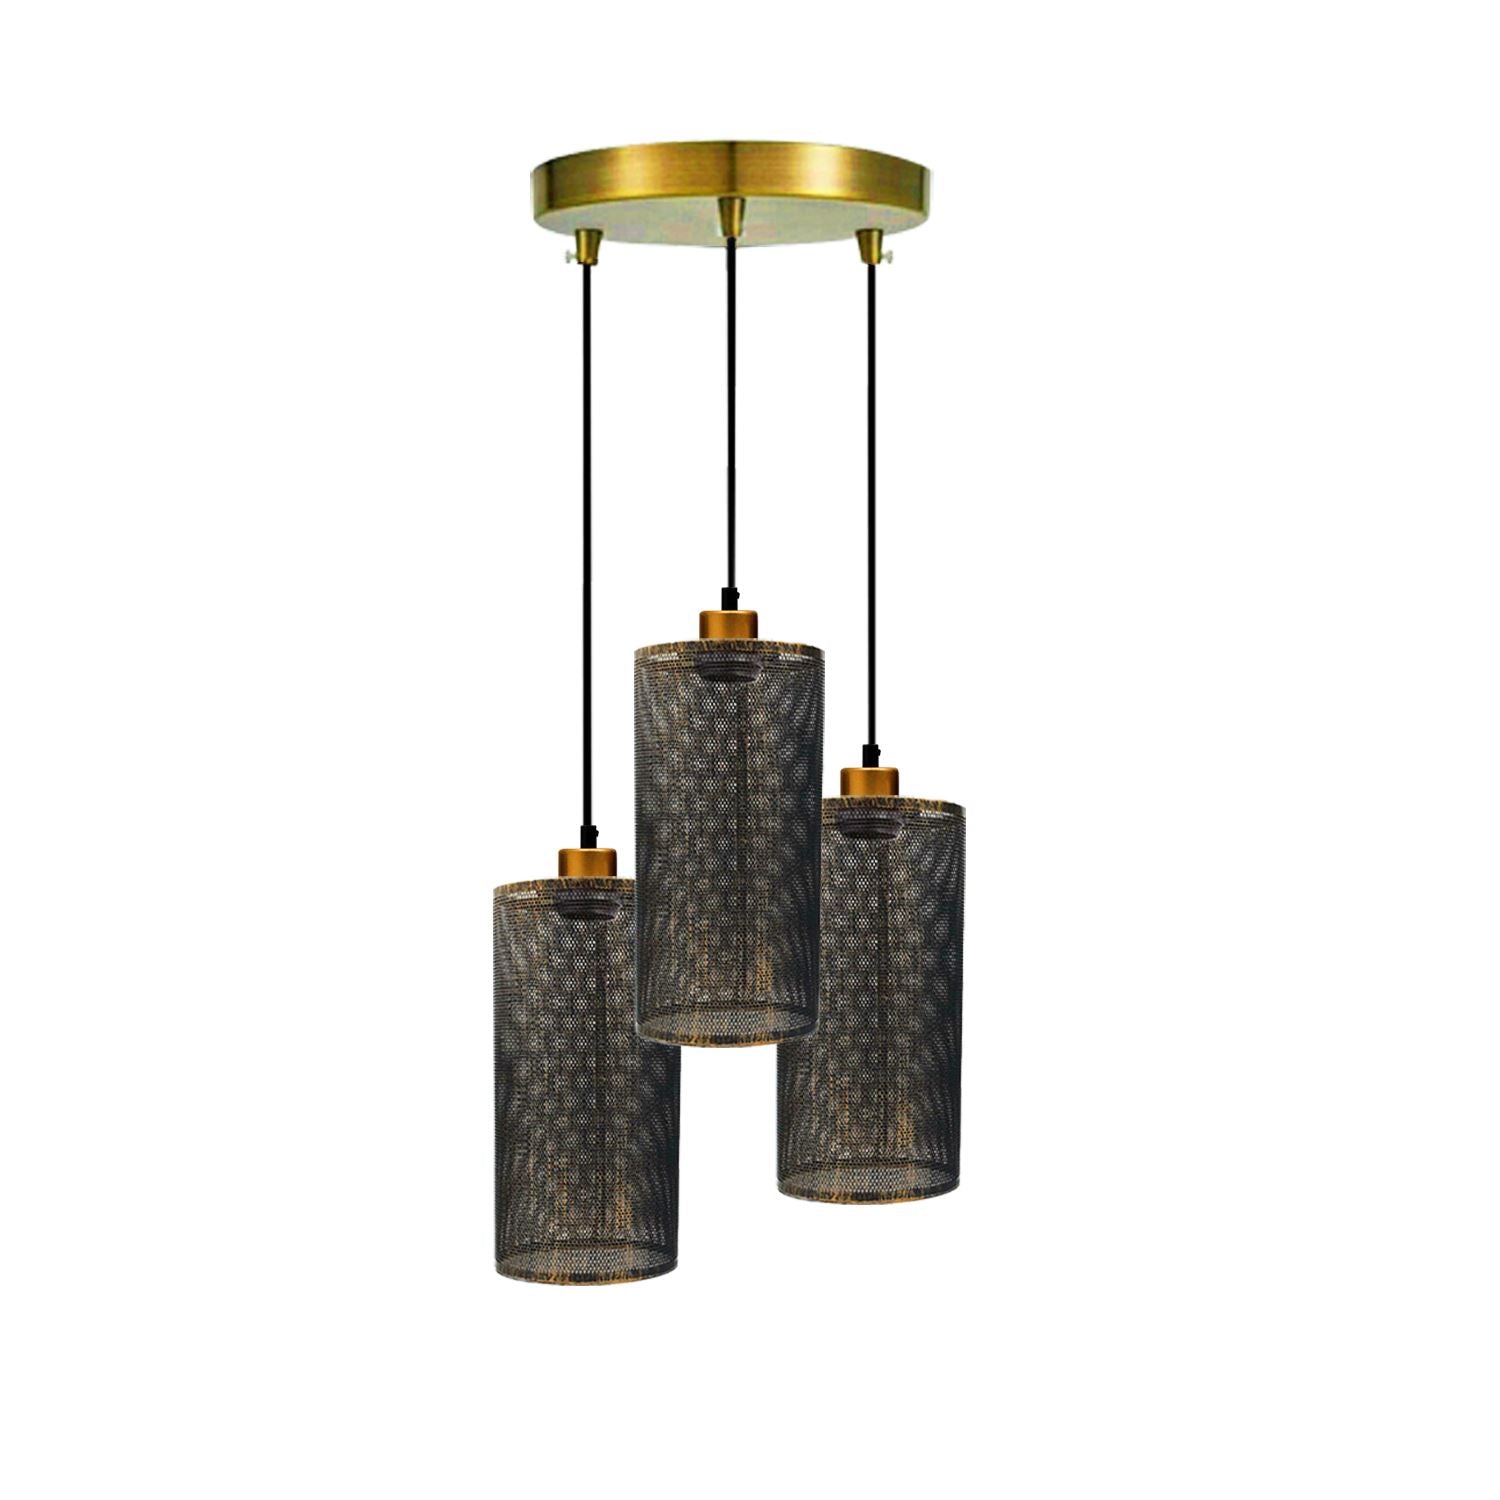 Ceiling Rose 3 Way Hanging Pendant Lamp Shade Light Fitting Lighting Kit UK~1188 - LEDSone UK Ltd